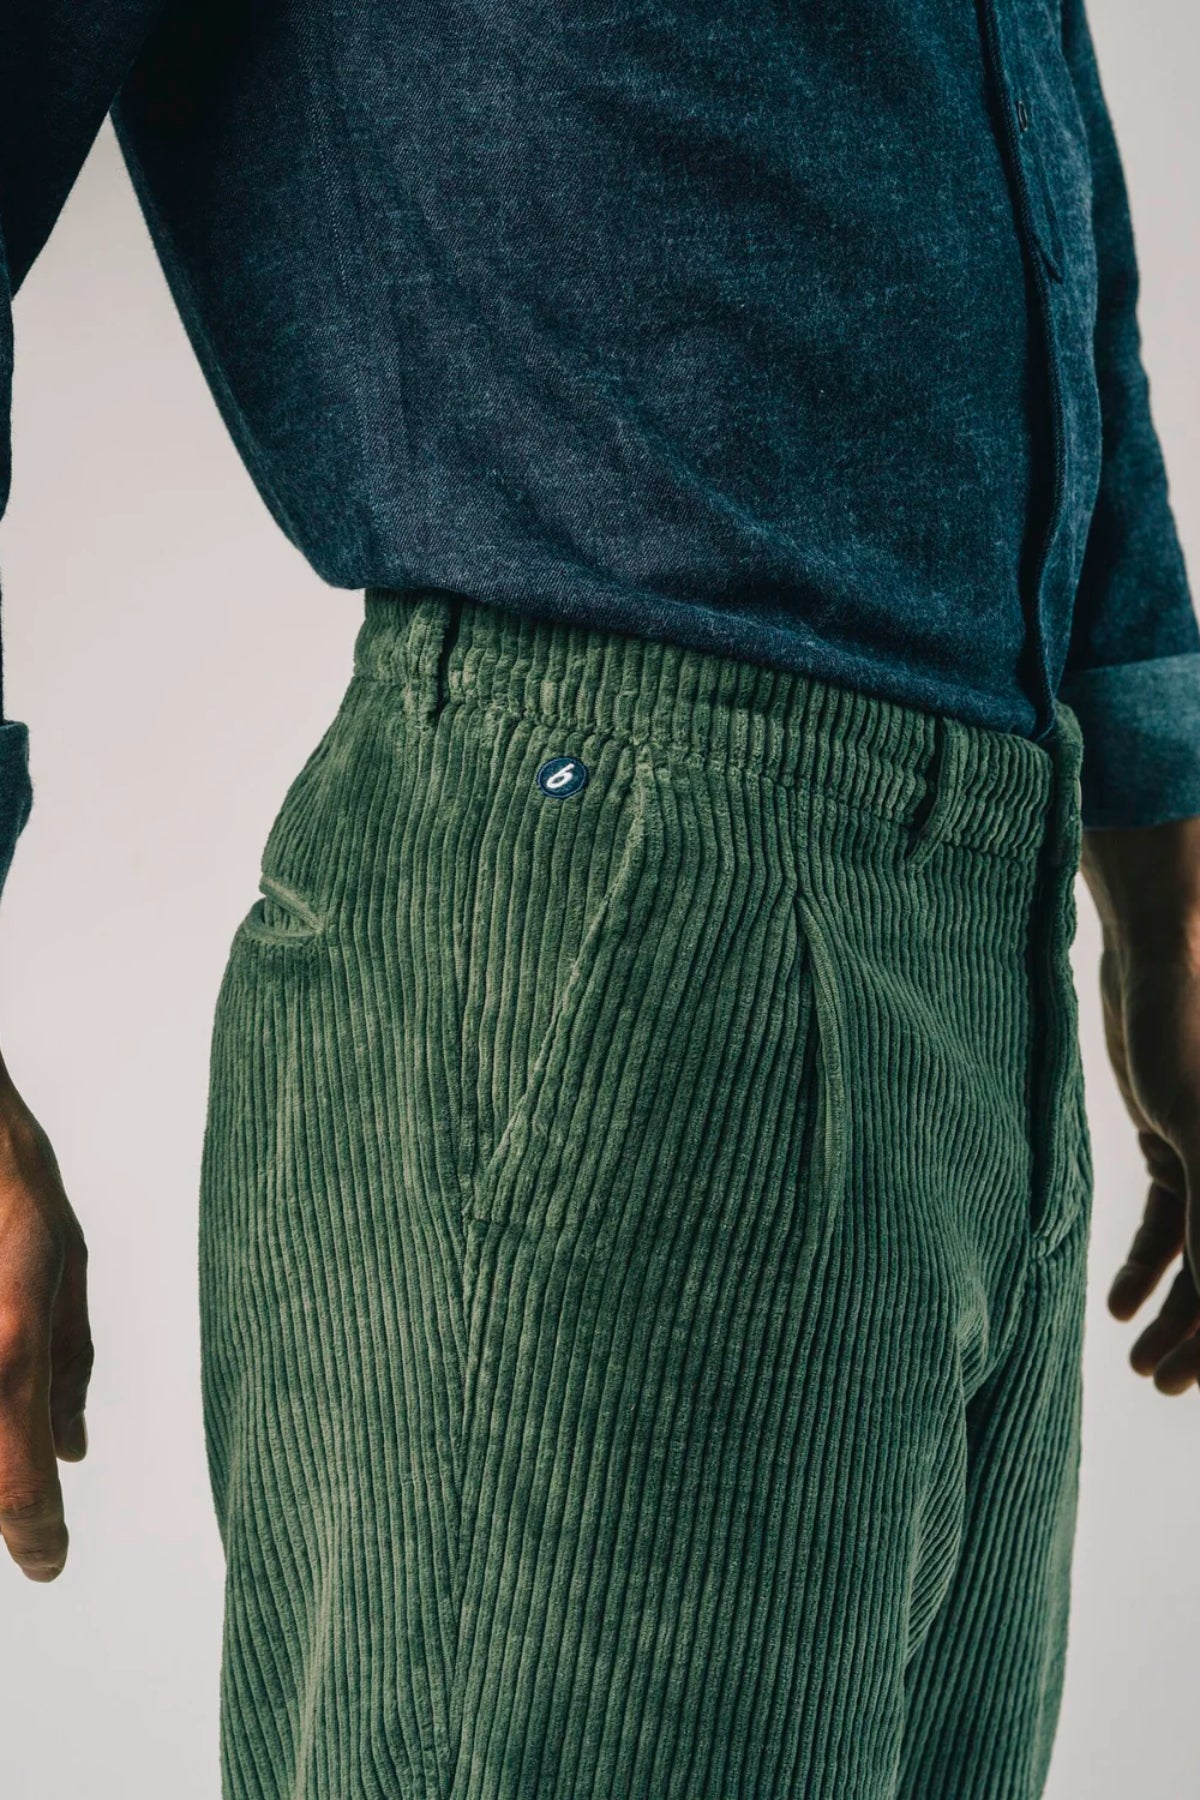 Chino Corduroy Pants - Brava fabrics